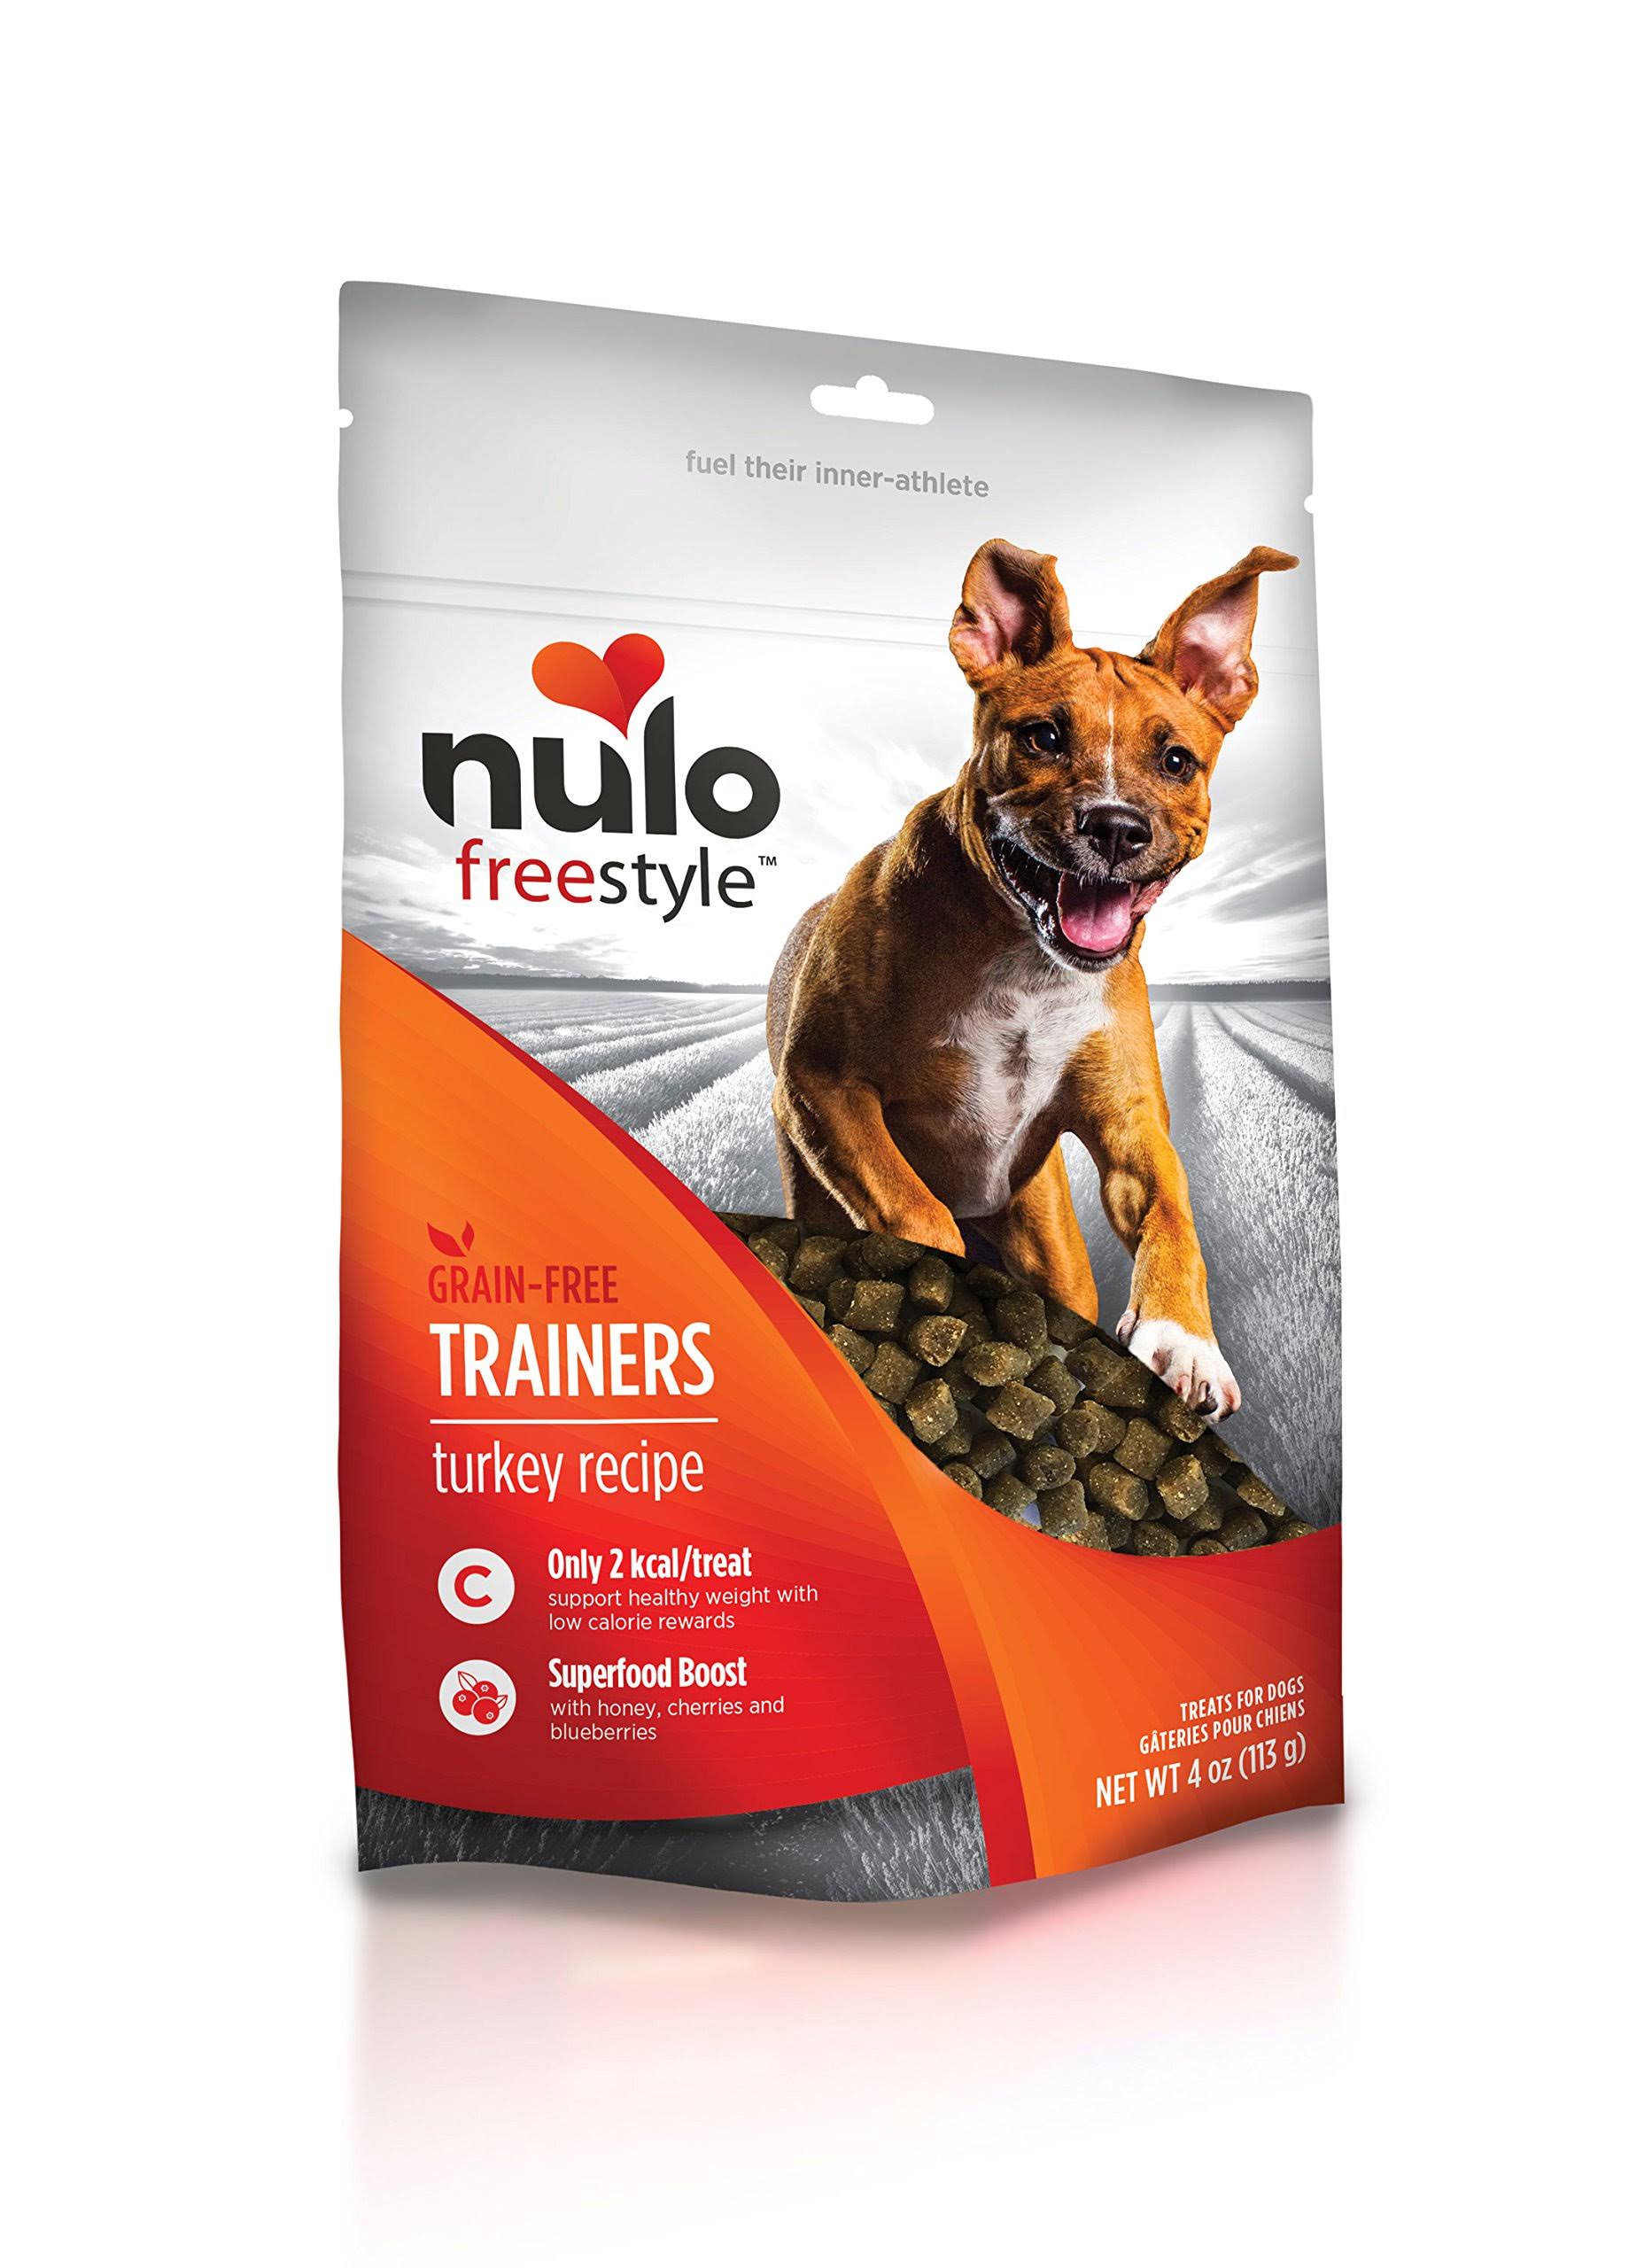 Nulo Freestyle Turkey Recipe Grain-Free Dog Training Treats 4 oz